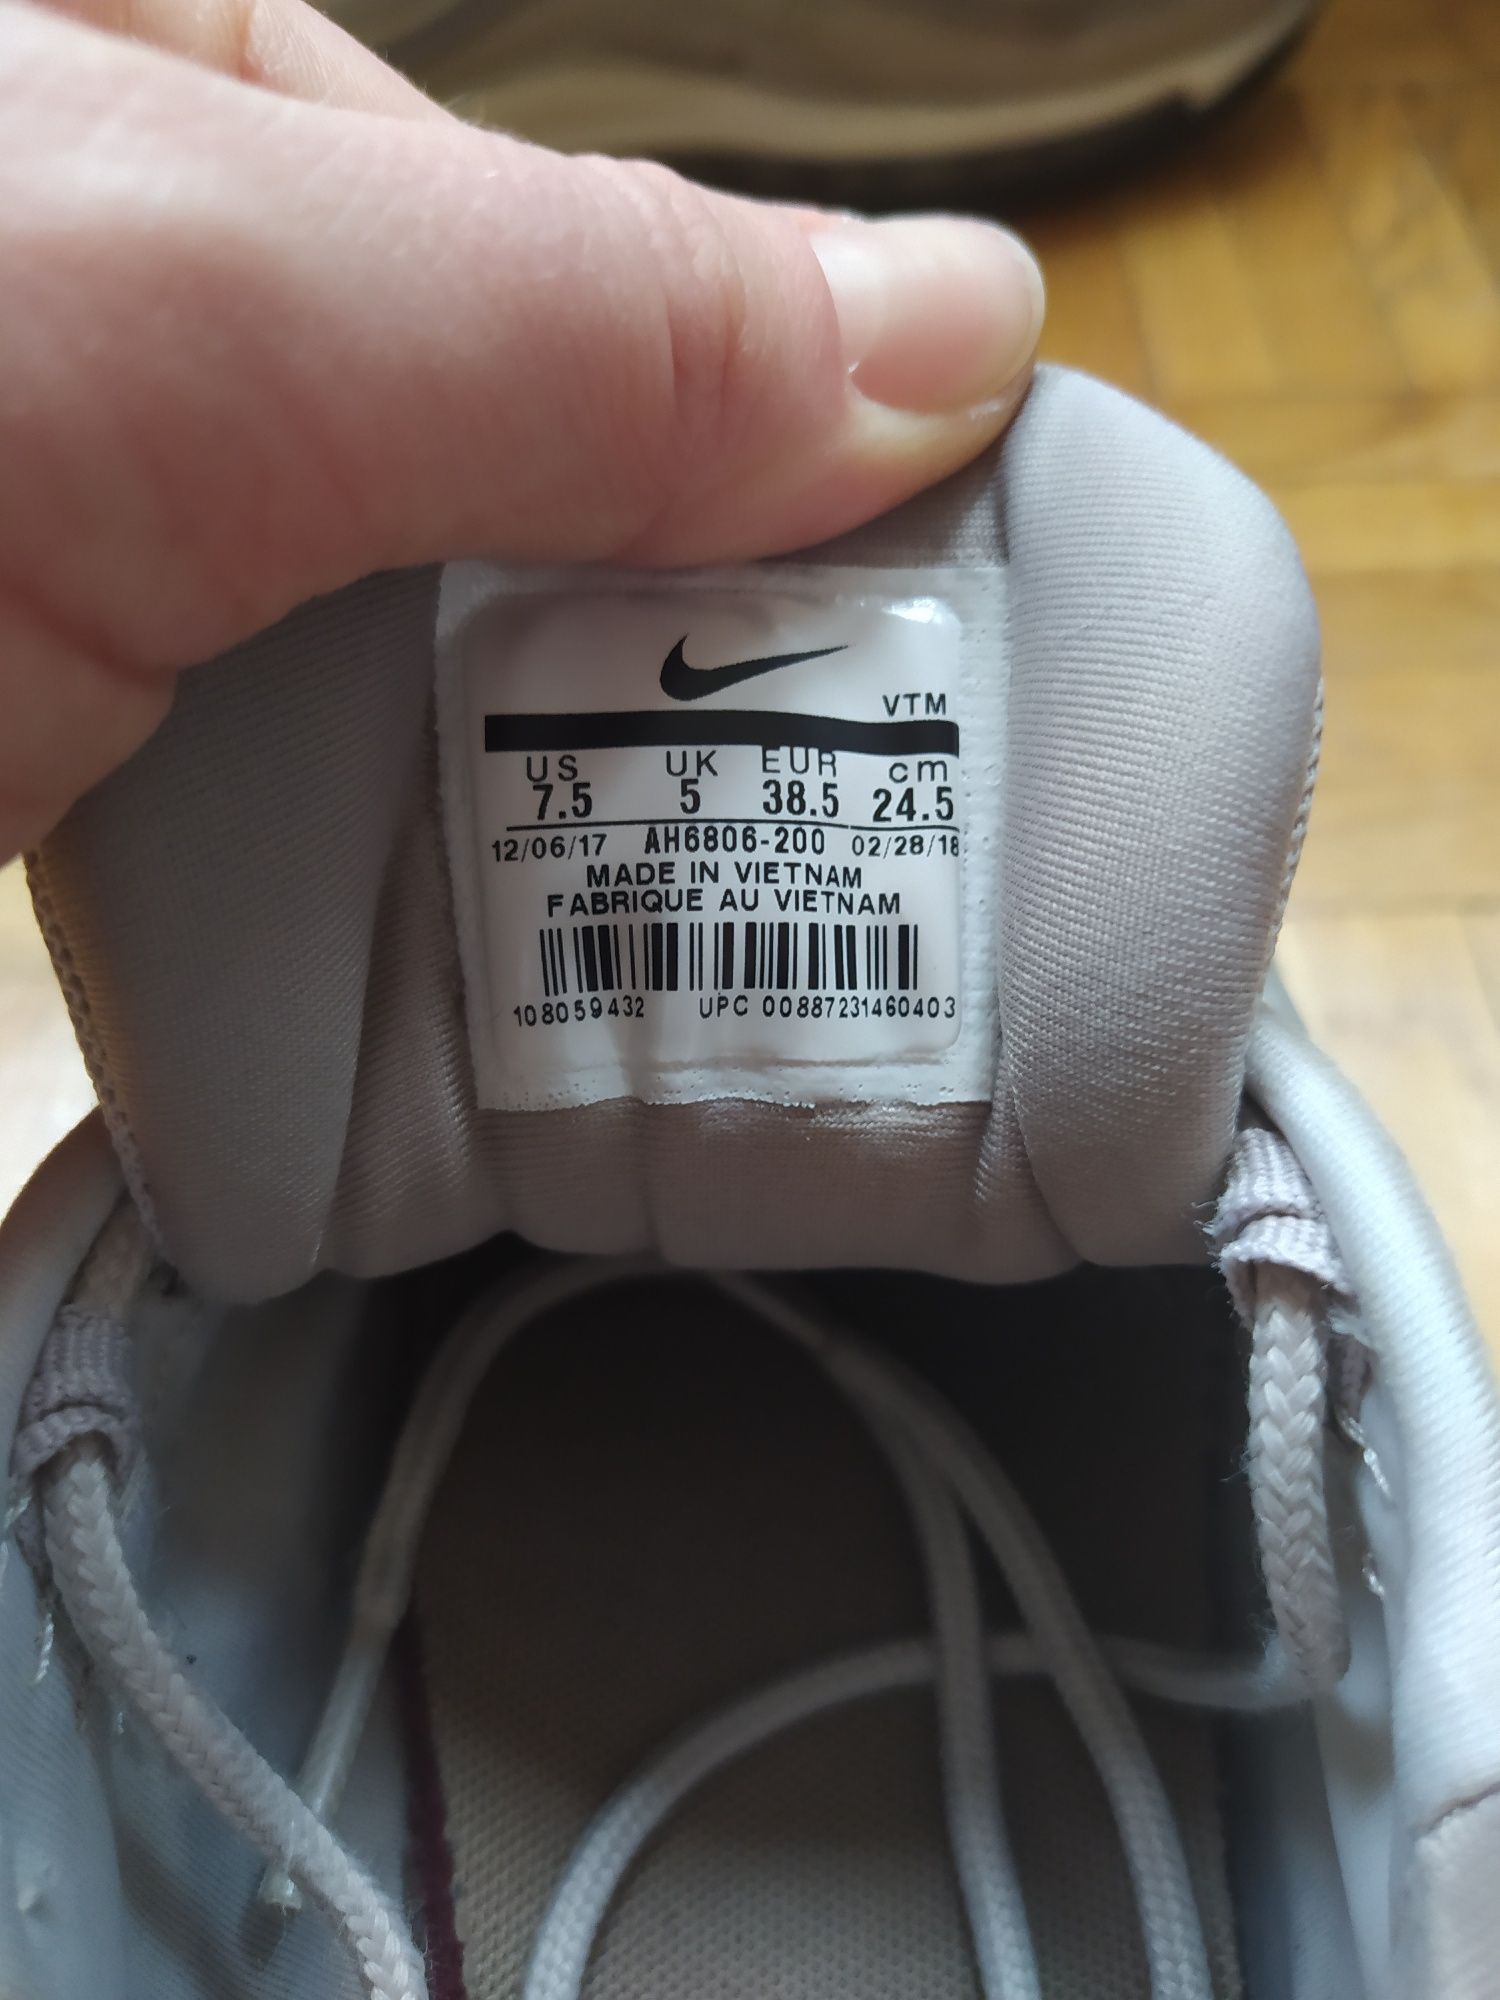 Nike air max 97 rozmiar 38,5